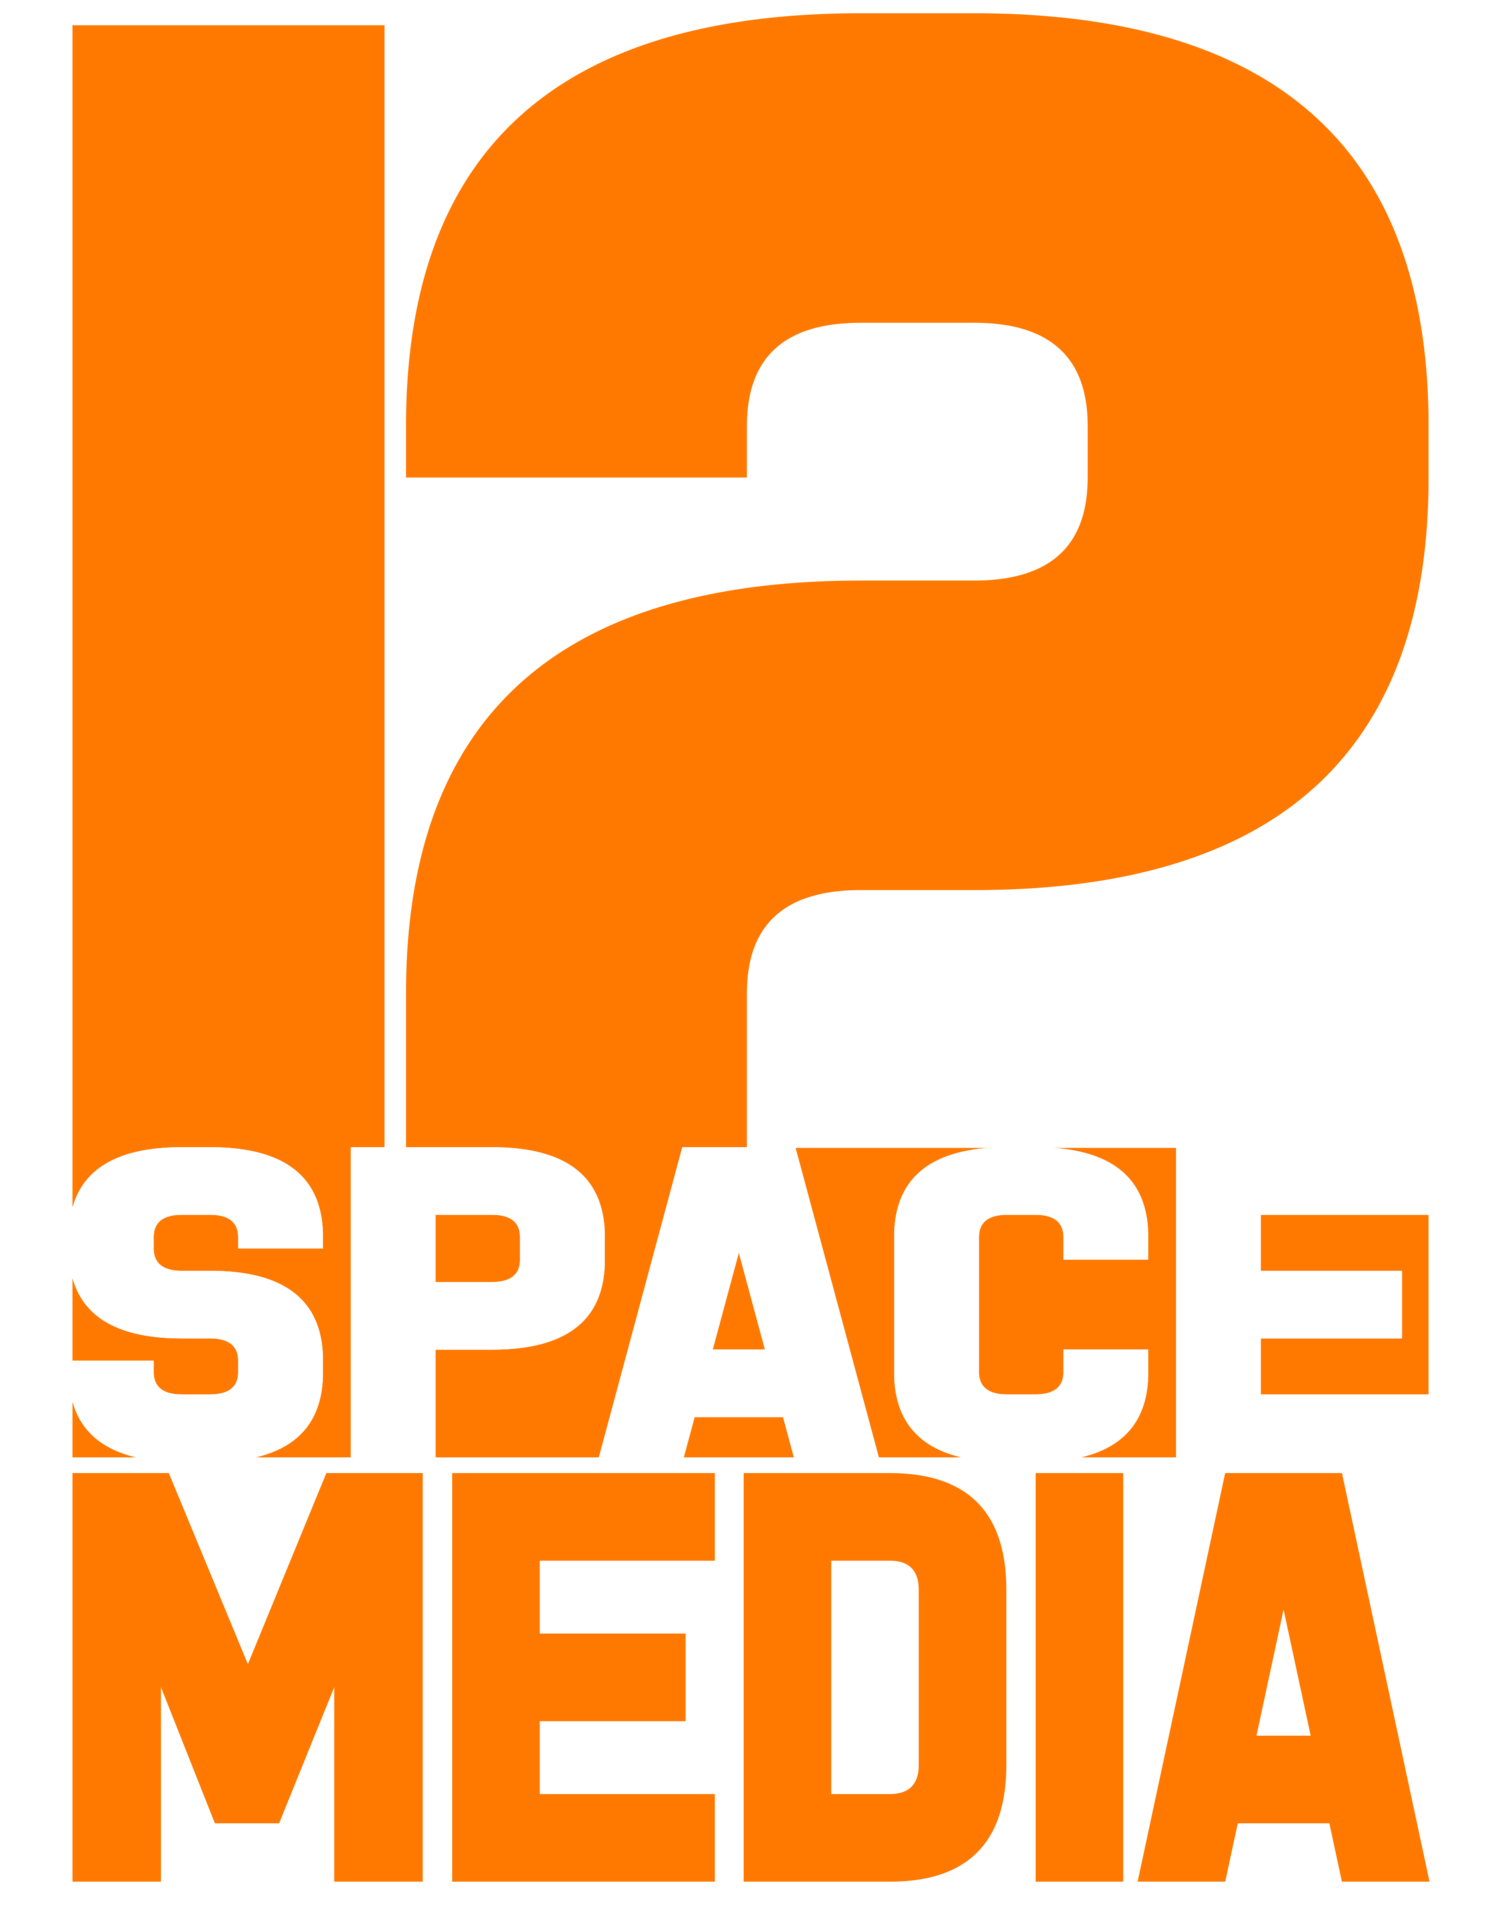 12Space Media